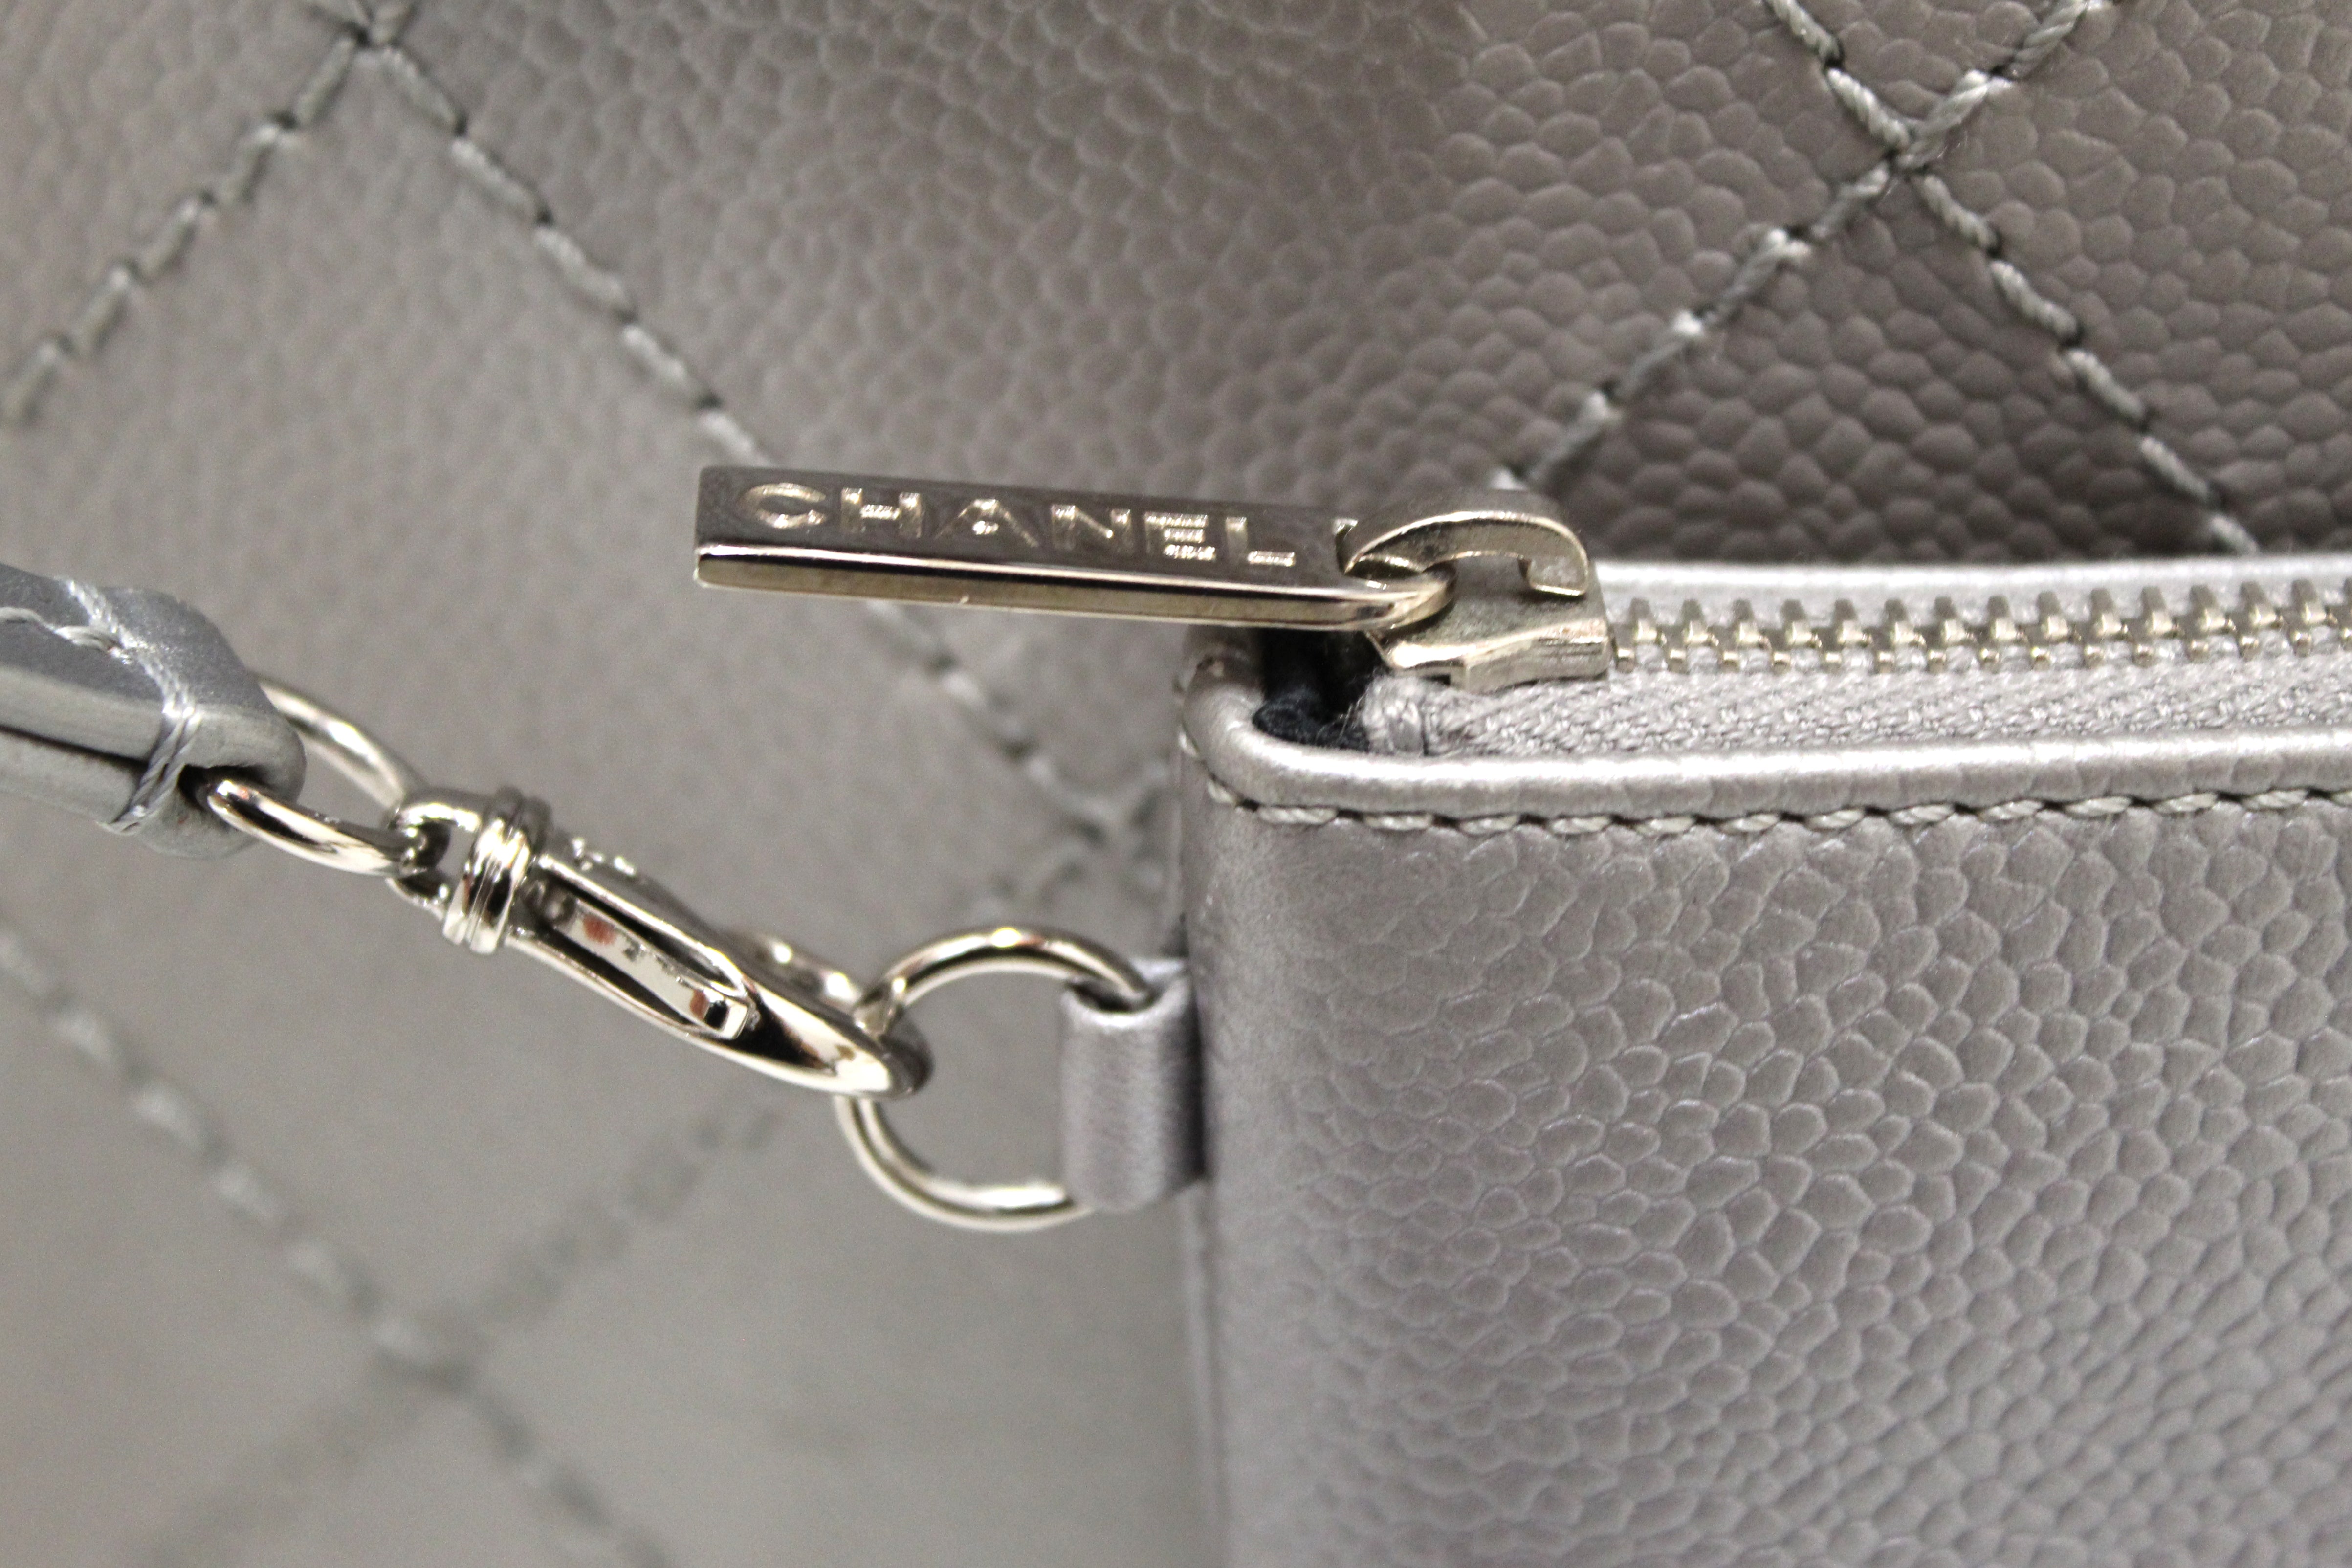 Authentic Chanel Silver Fever Caviar Quilted Shoulder Tote Bag – Paris  Station Shop